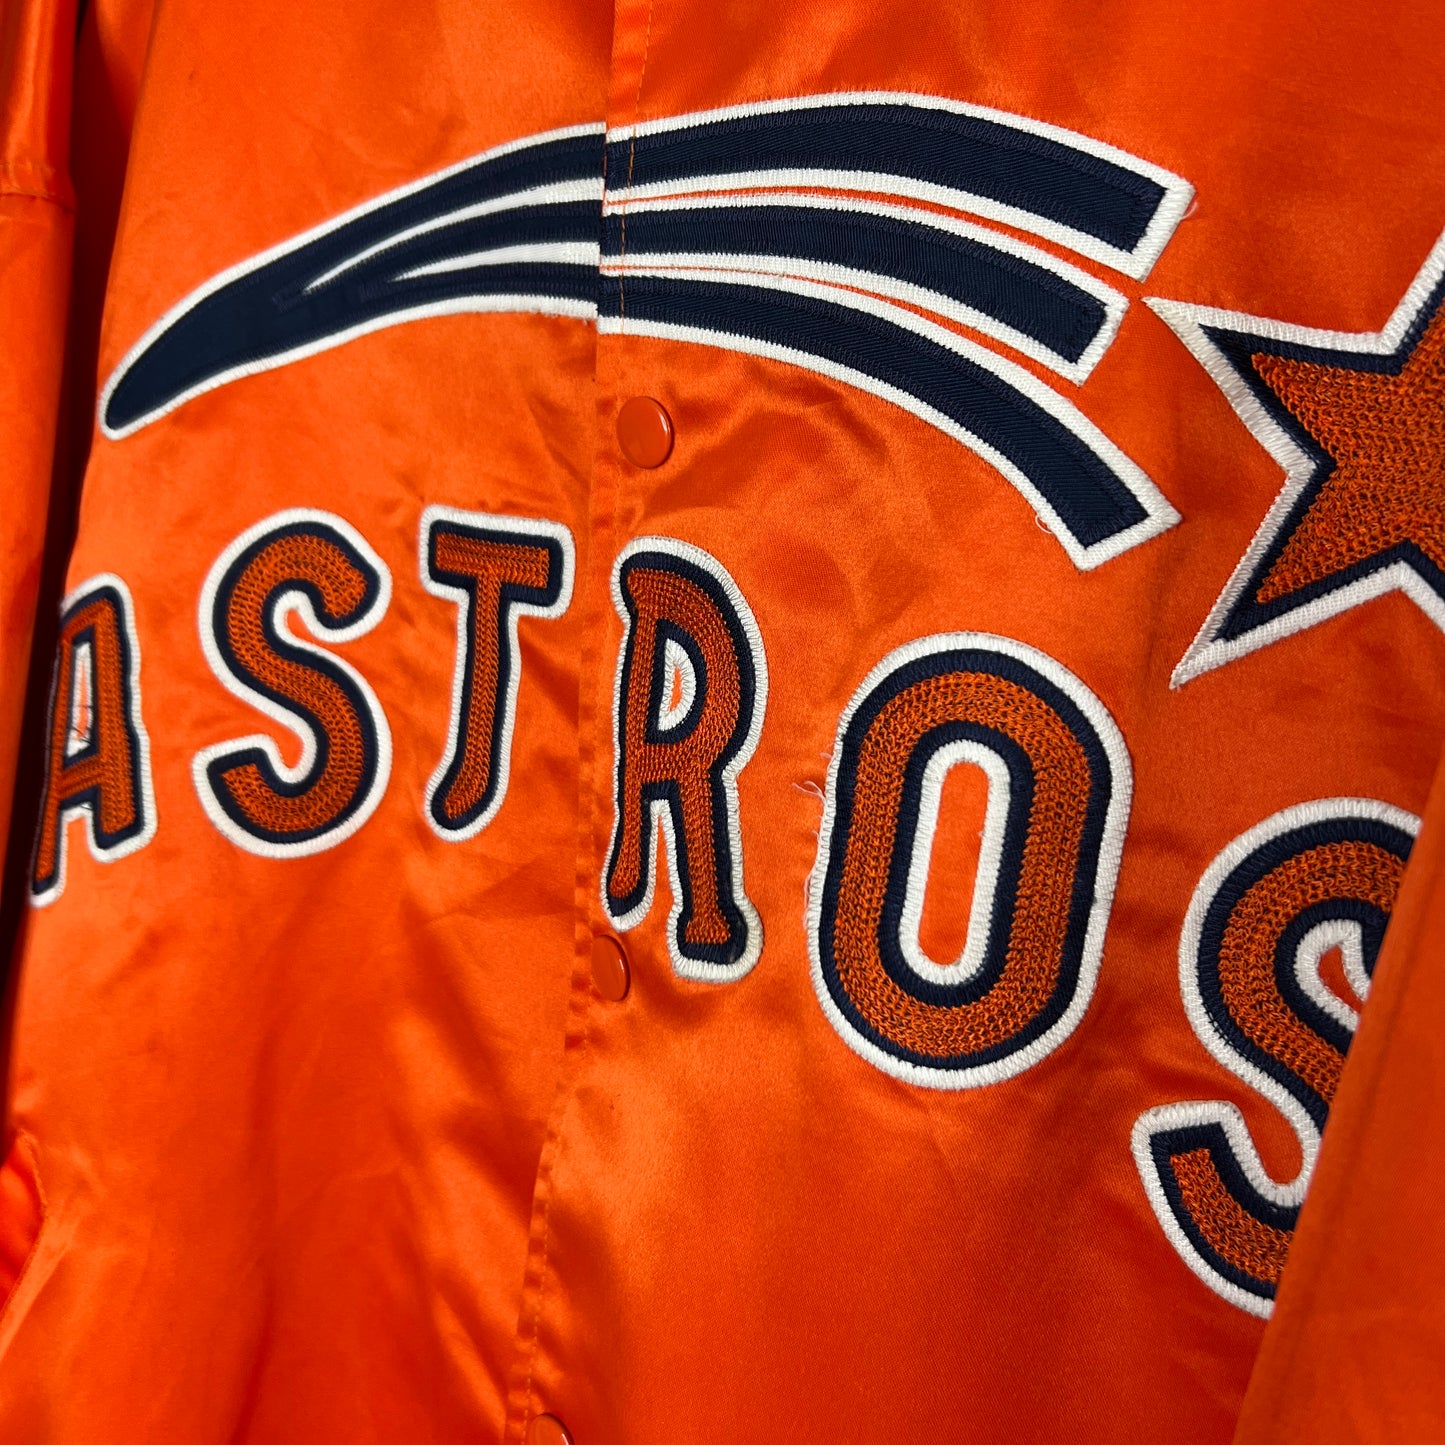 Houston Astros Cooperstown Jacket